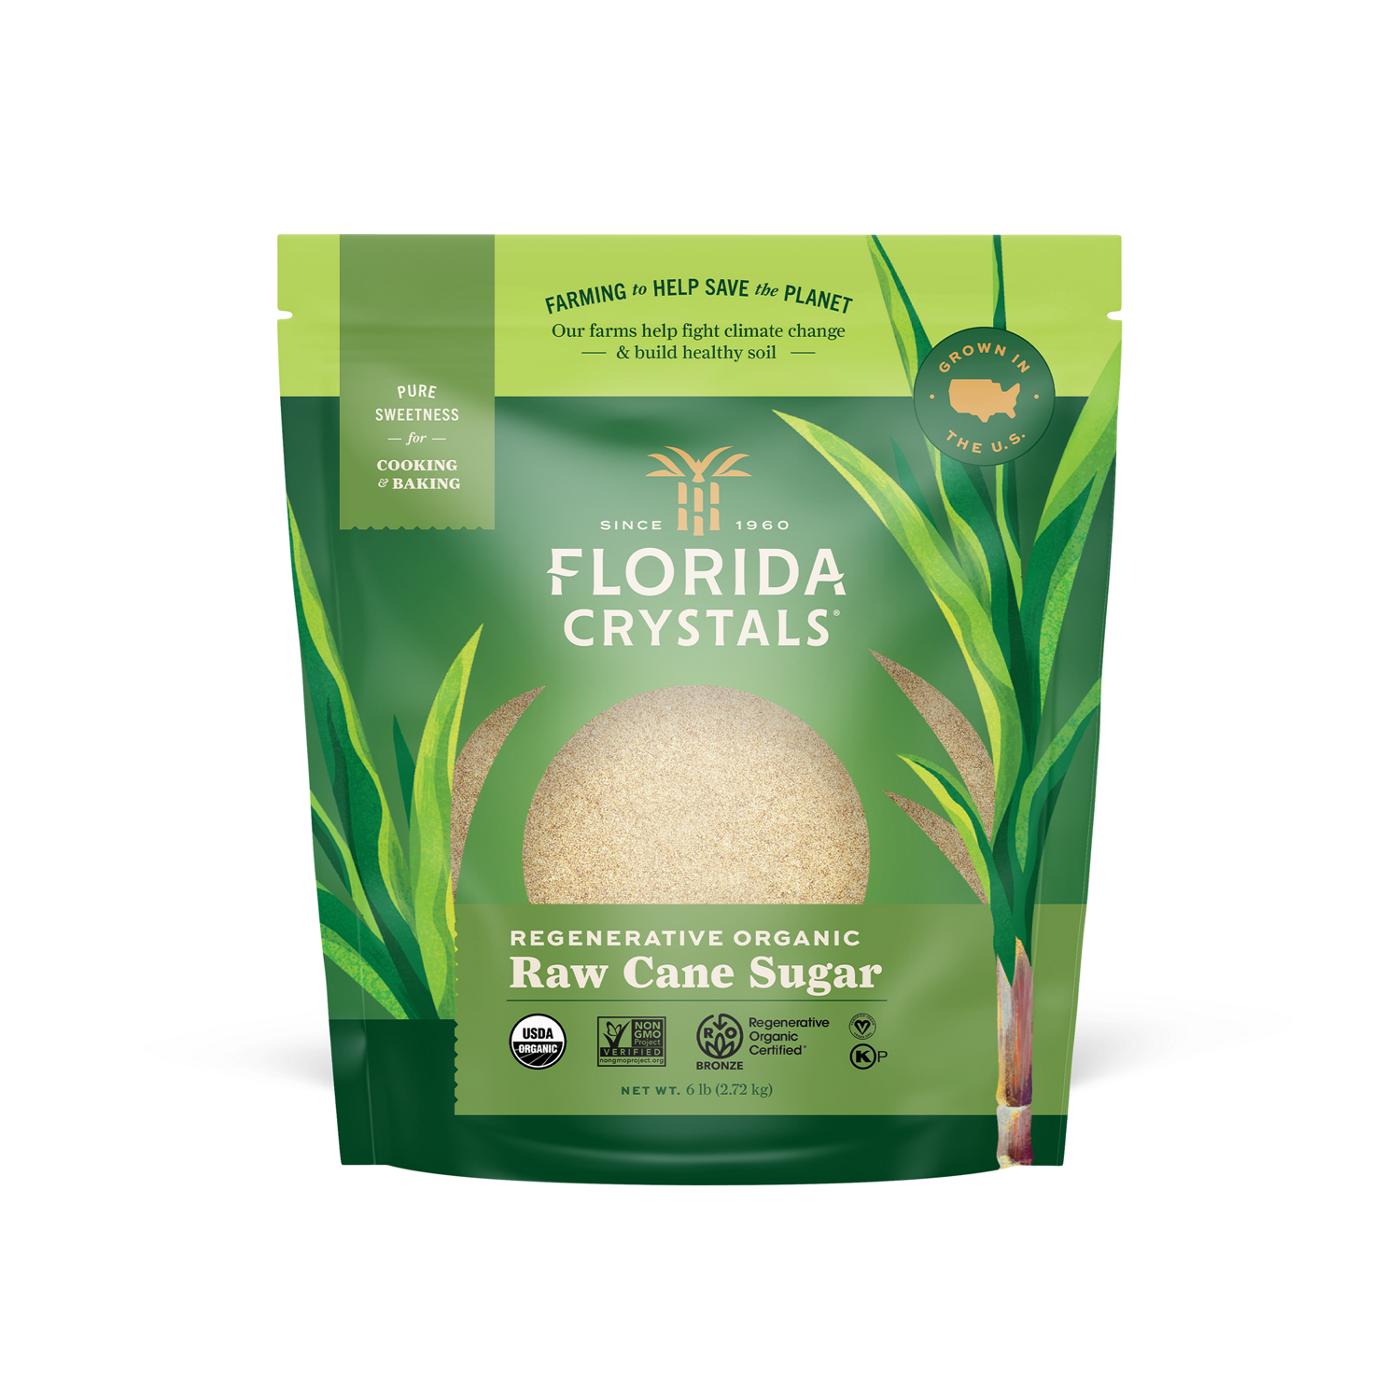 Florida Crystals Regenerative Organic Raw Cane Sugar; image 1 of 3